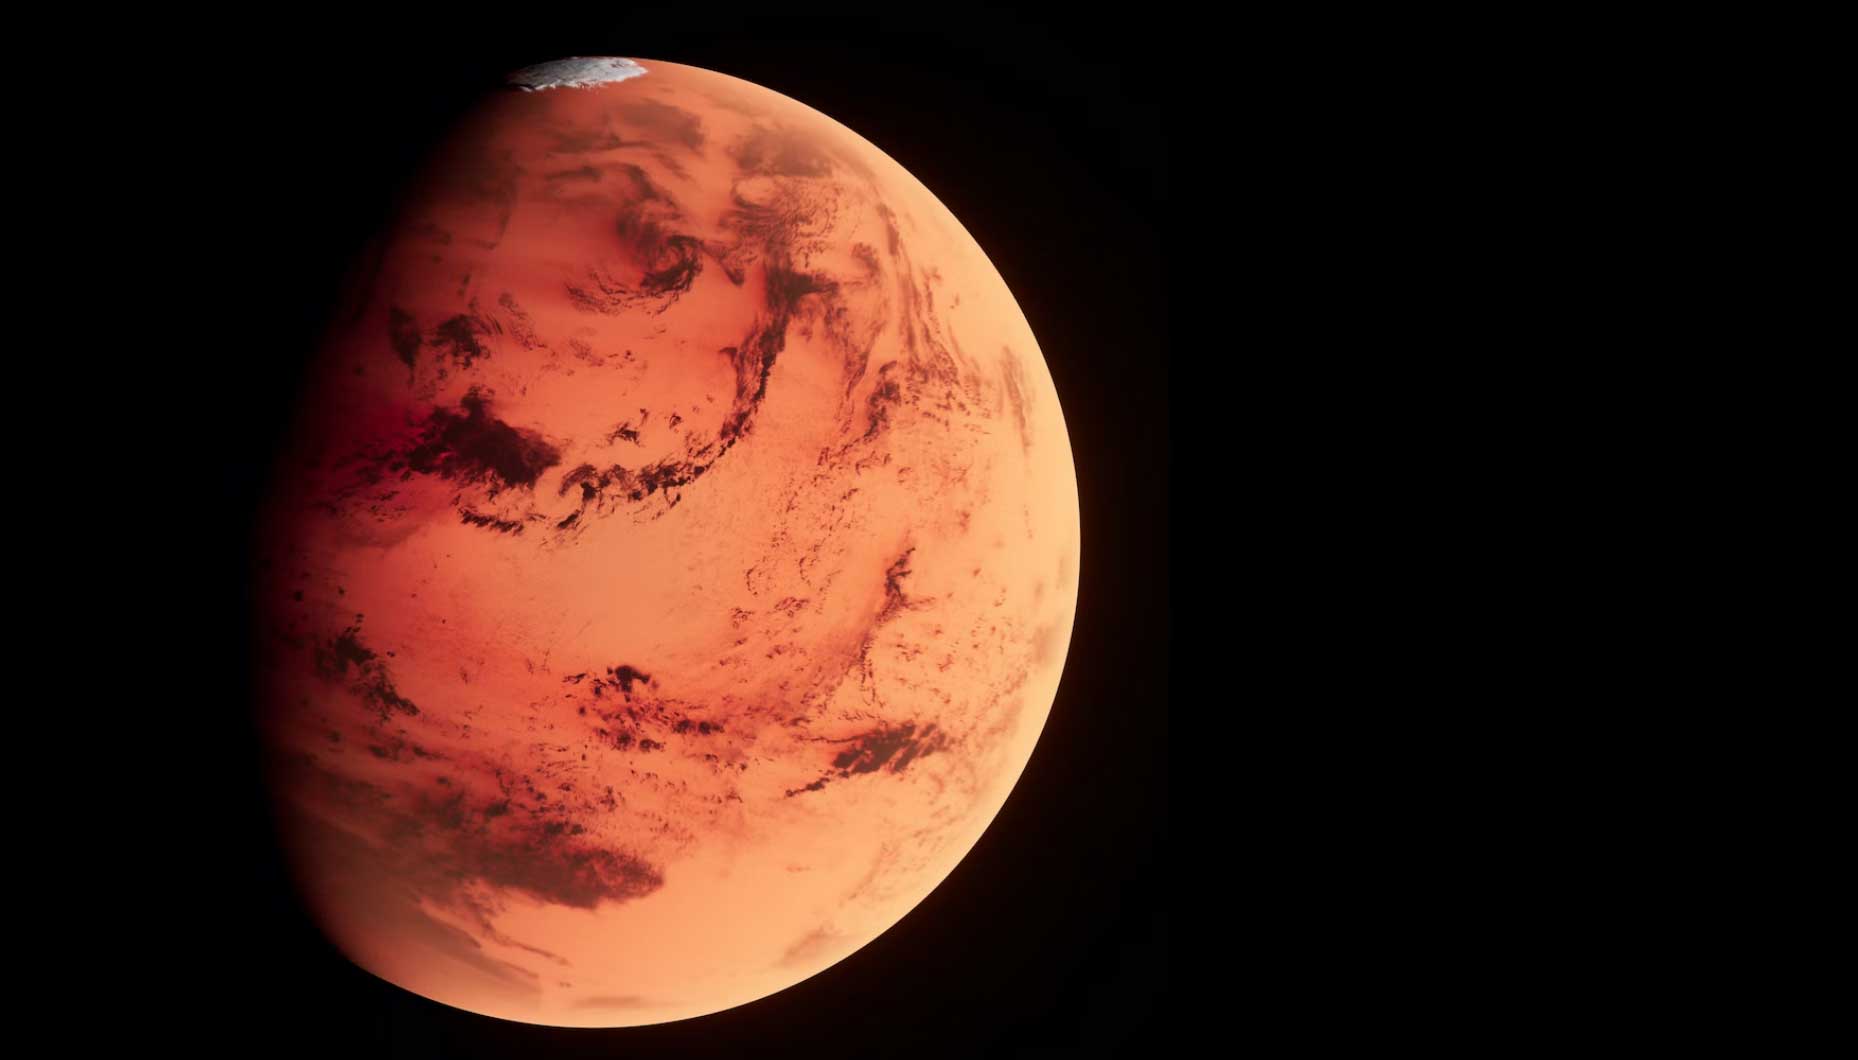 SpaceX Elon Musk Announces Starship Orbital Mission to Mars